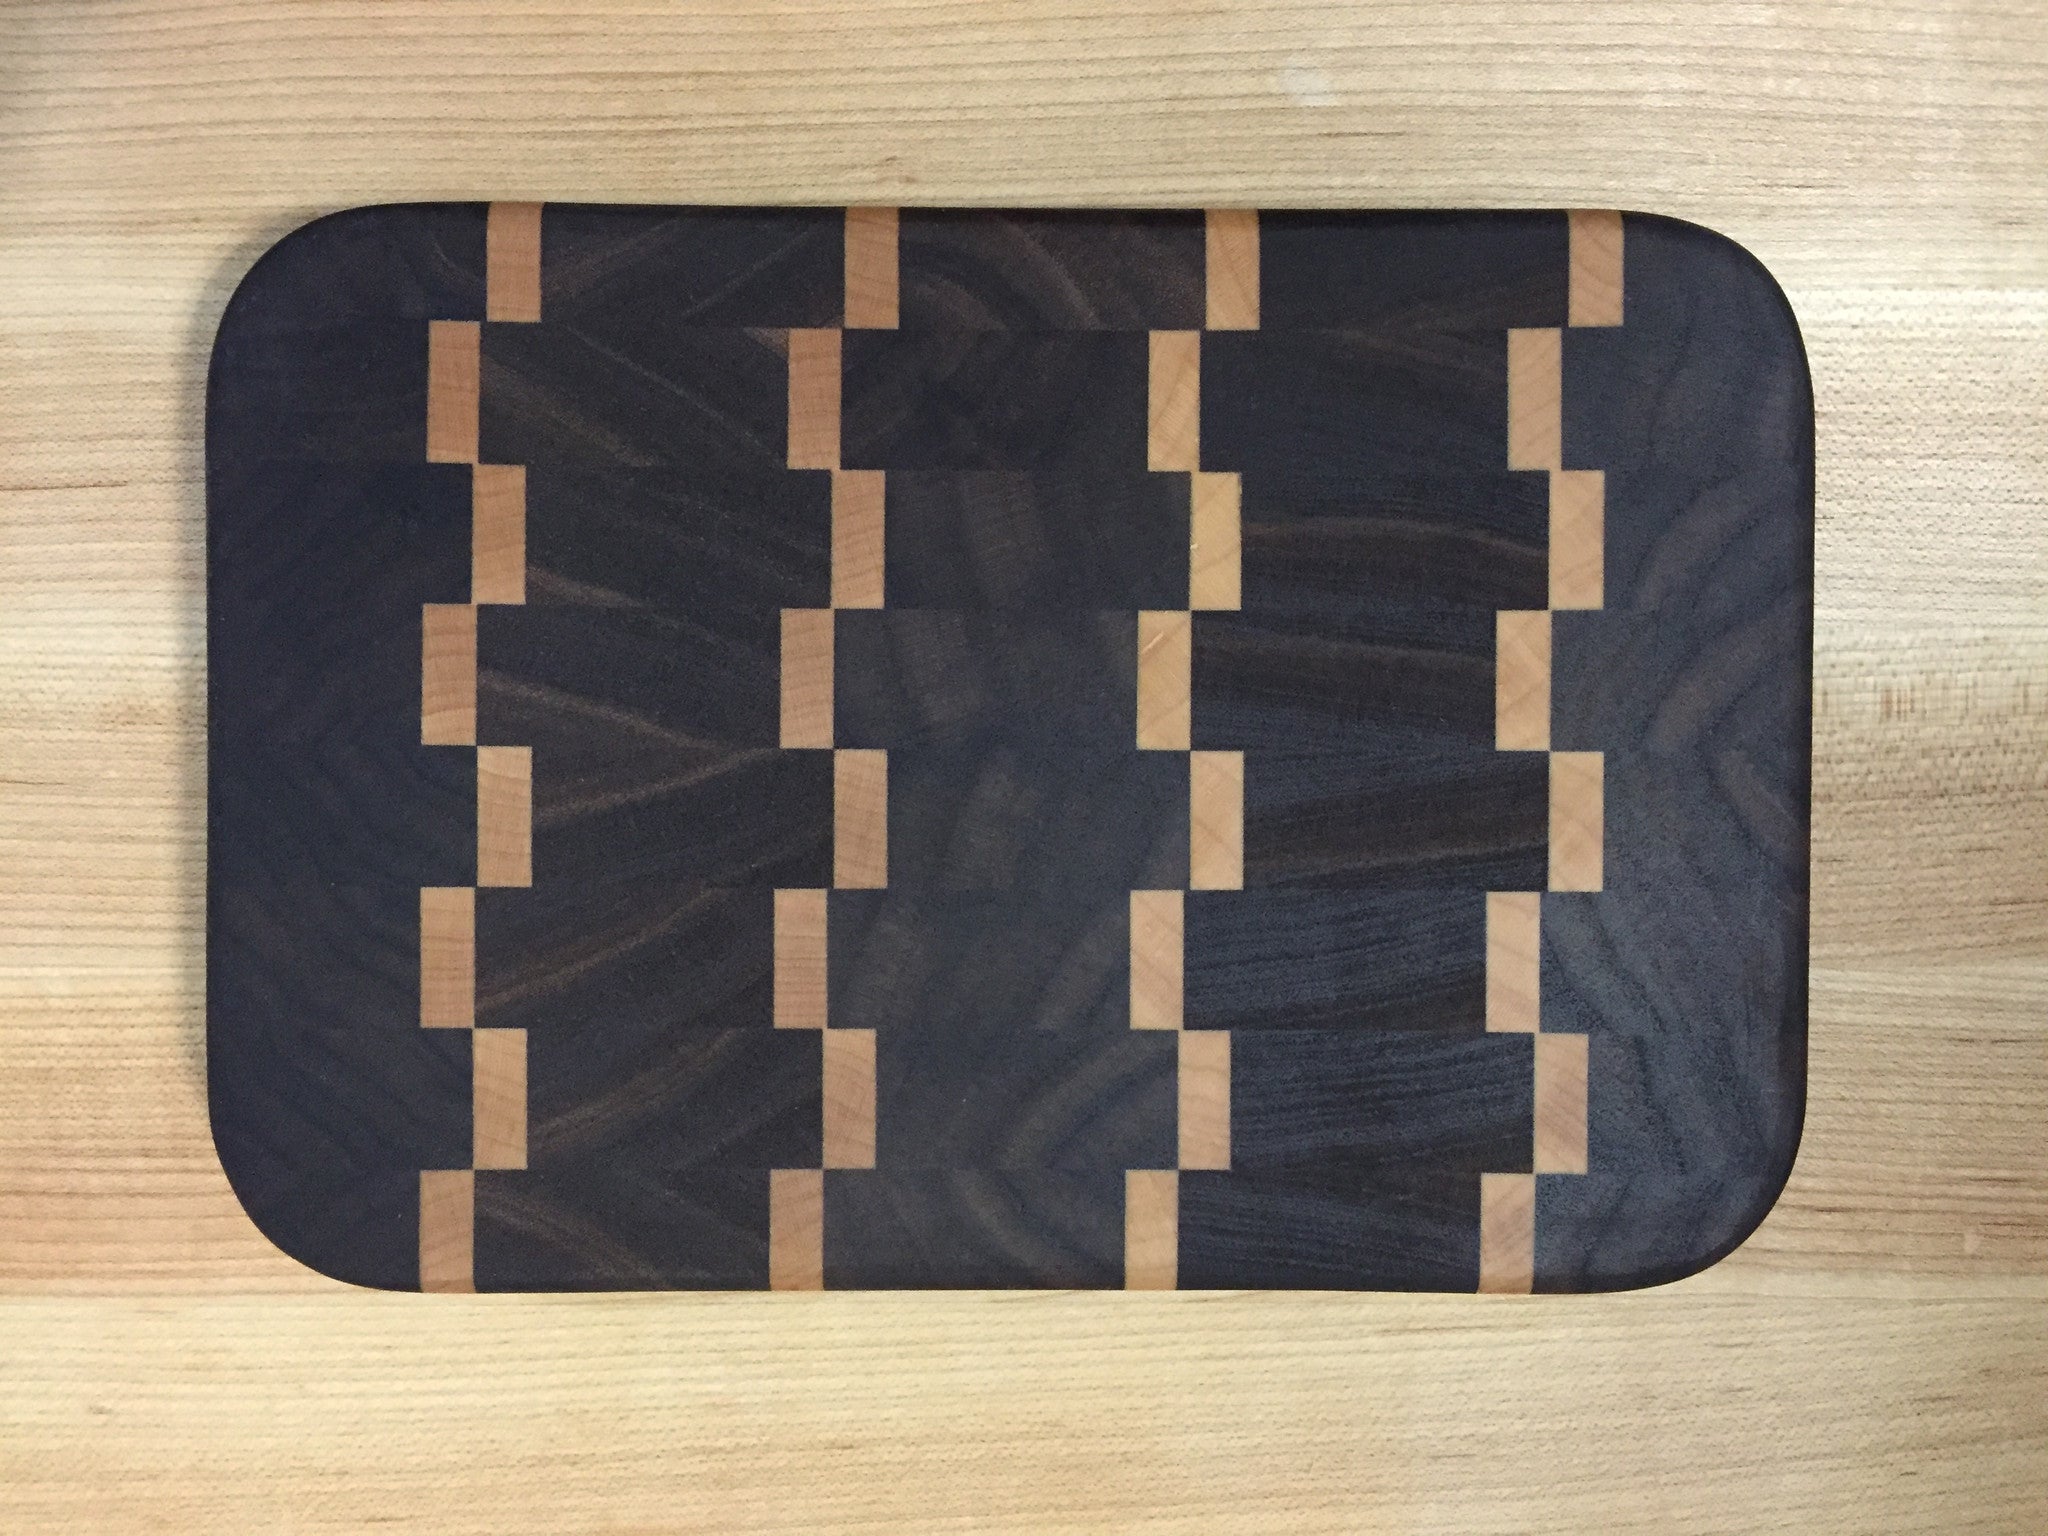 Handcrafted Wood Cutting Board- Maple & Black Walnut - Unique